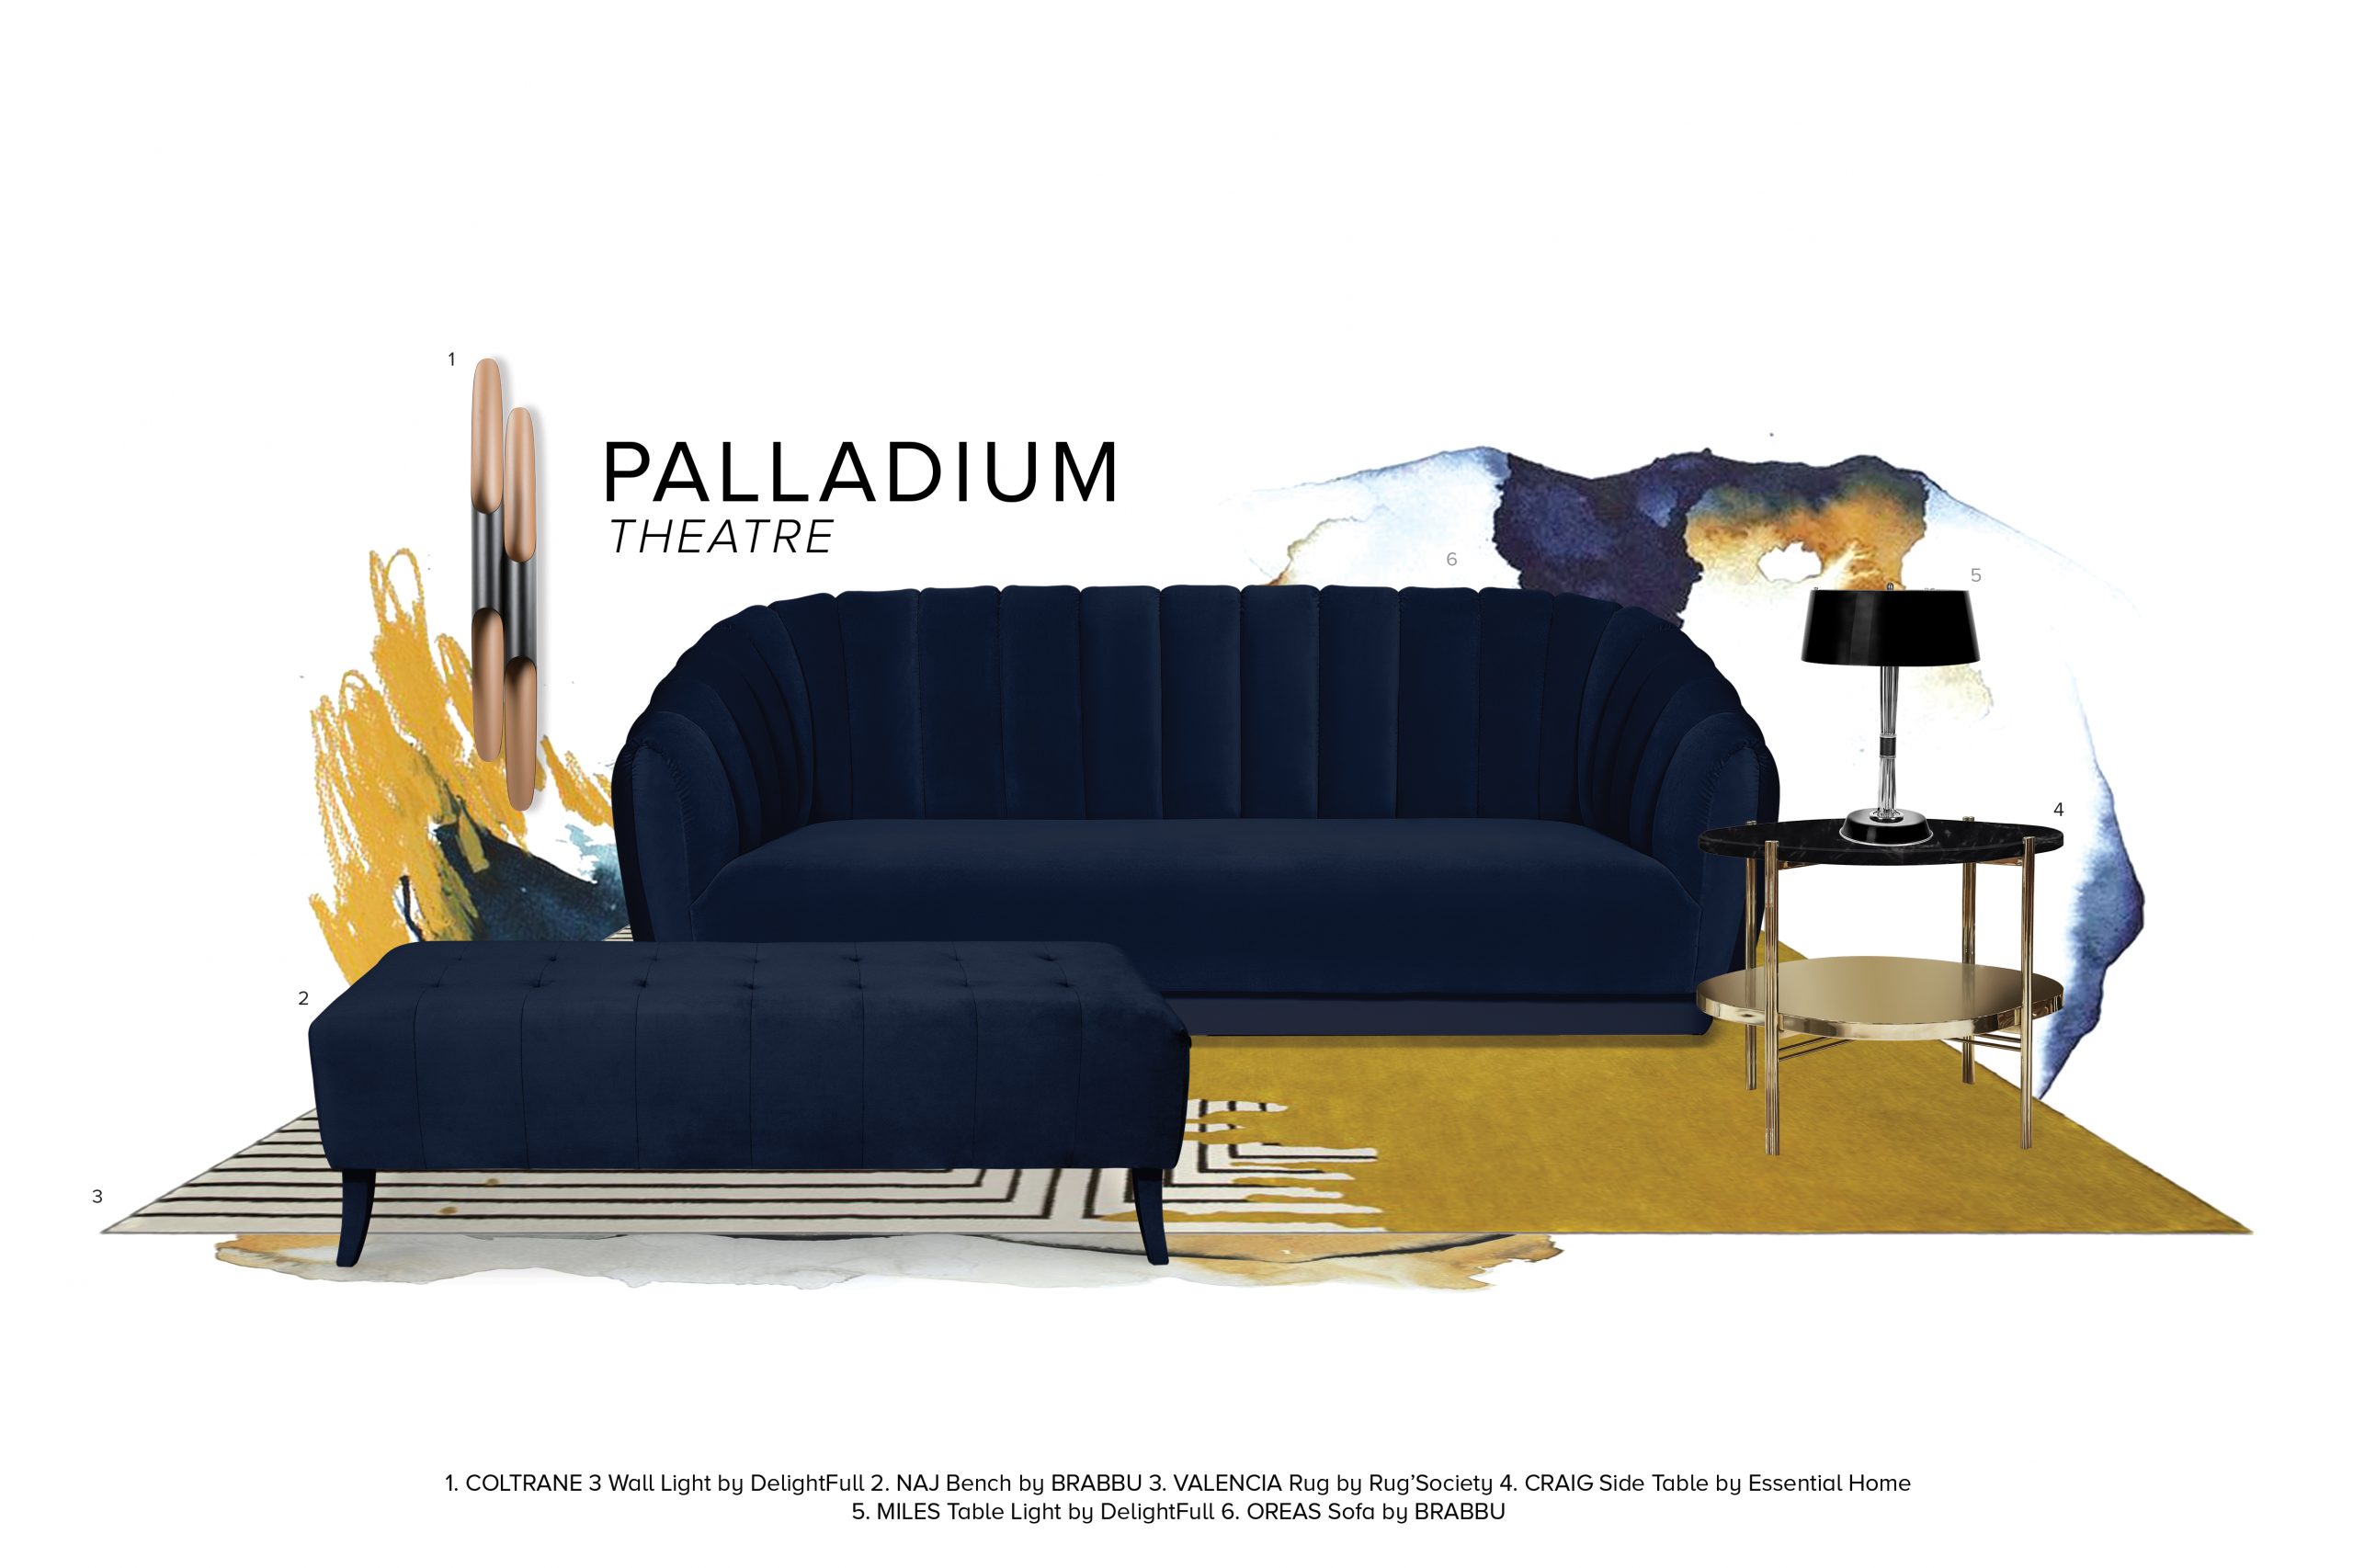 Palladium Theatre: A Home Cinema With A Luxurious Rug